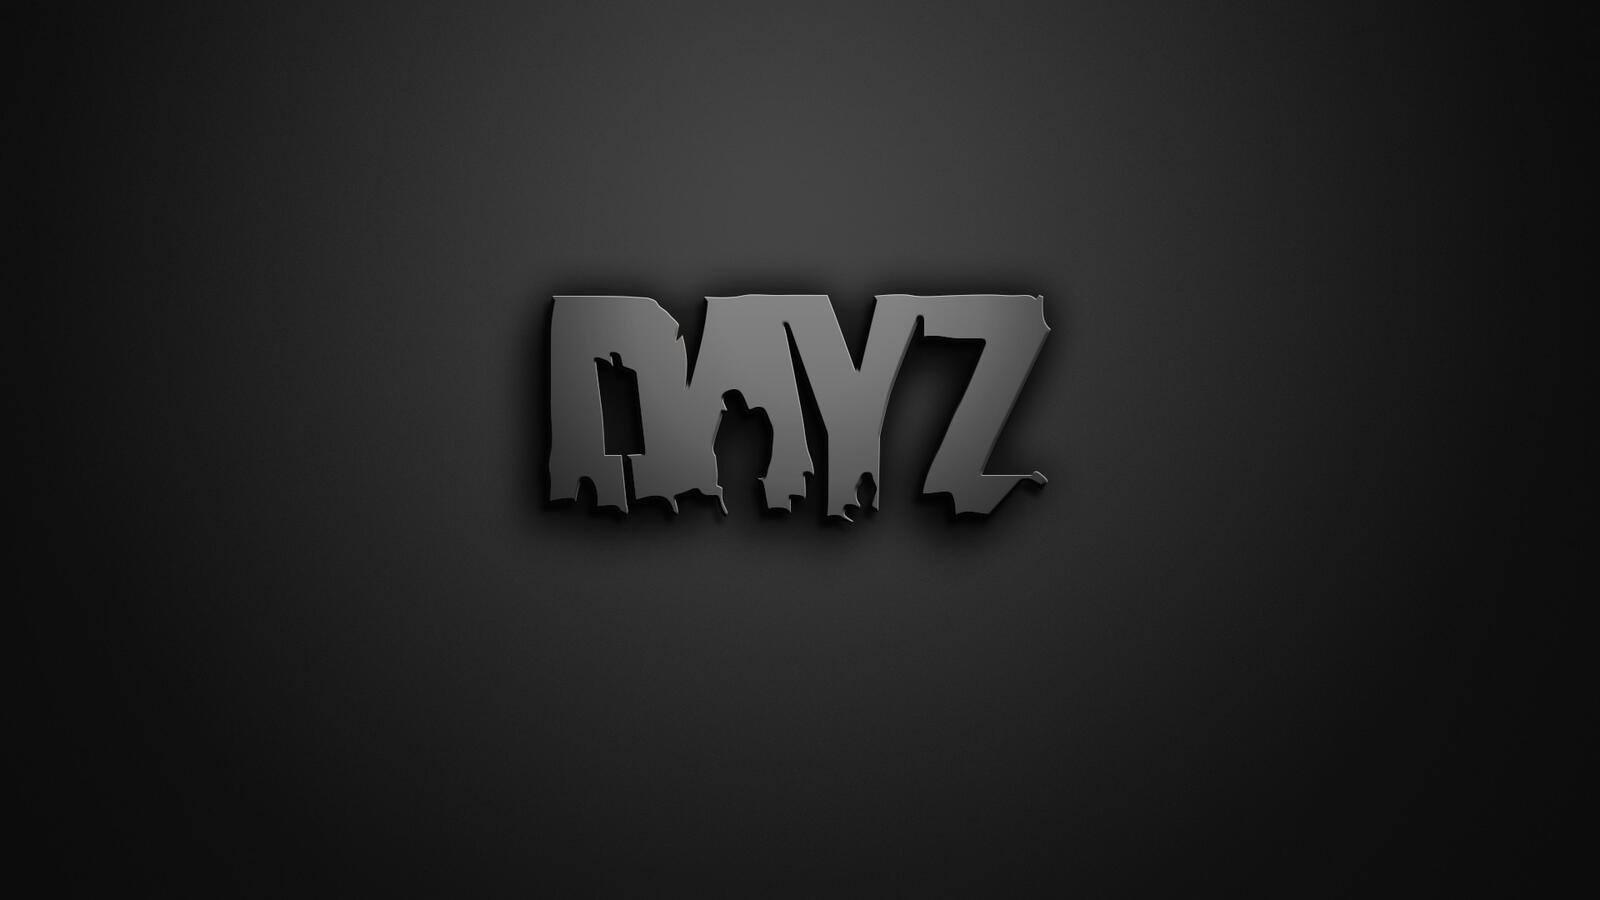 Free photo DayZ game logo